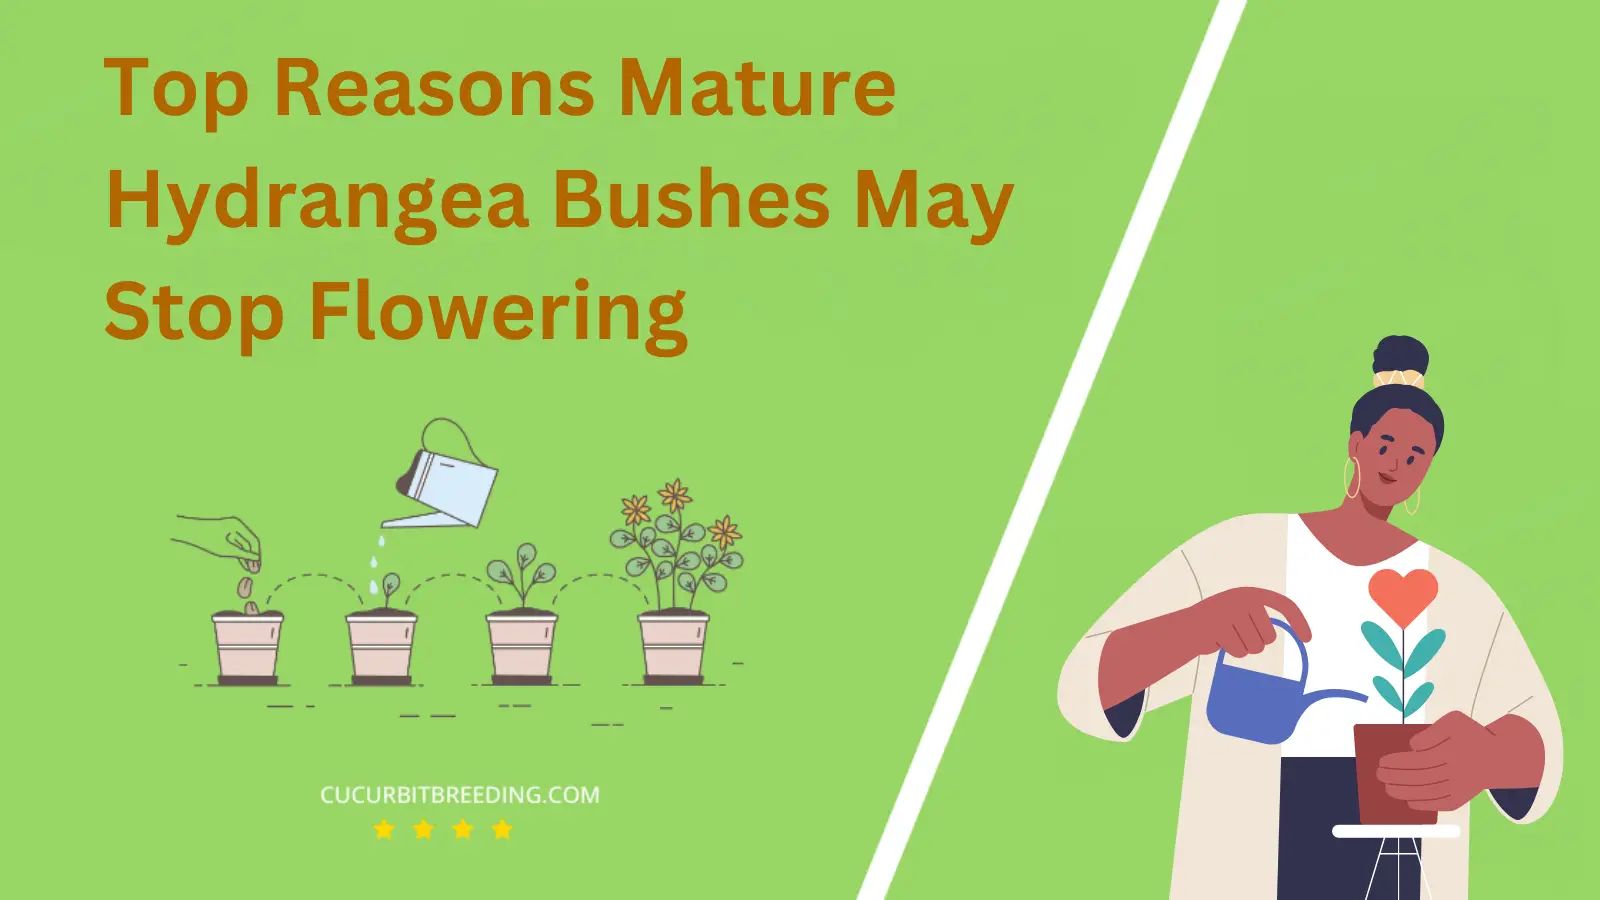 Top Reasons Mature Hydrangea Bushes May Stop Flowering